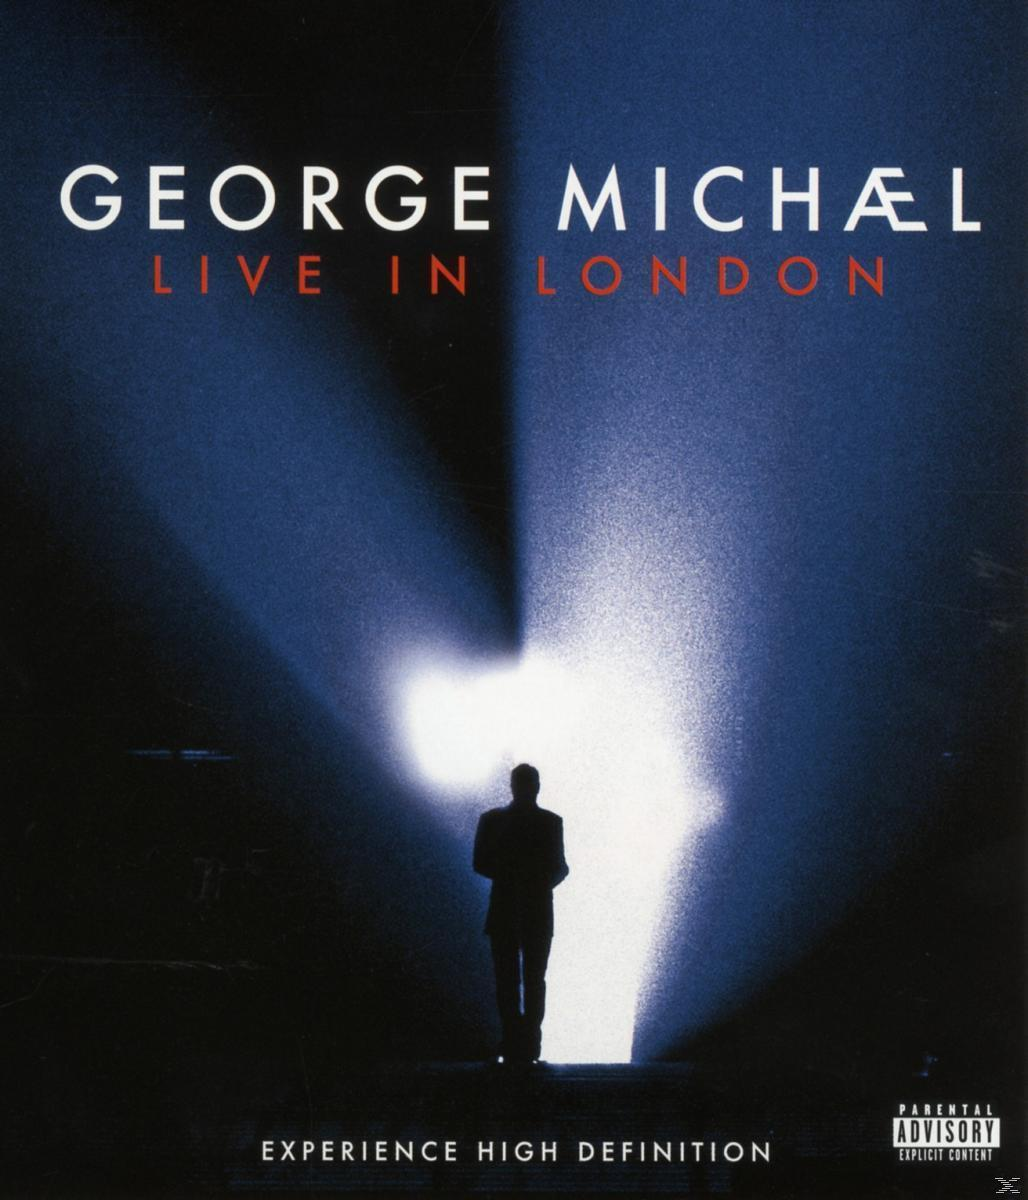 London - - In George - Michael Live (Blu-ray) George Michael